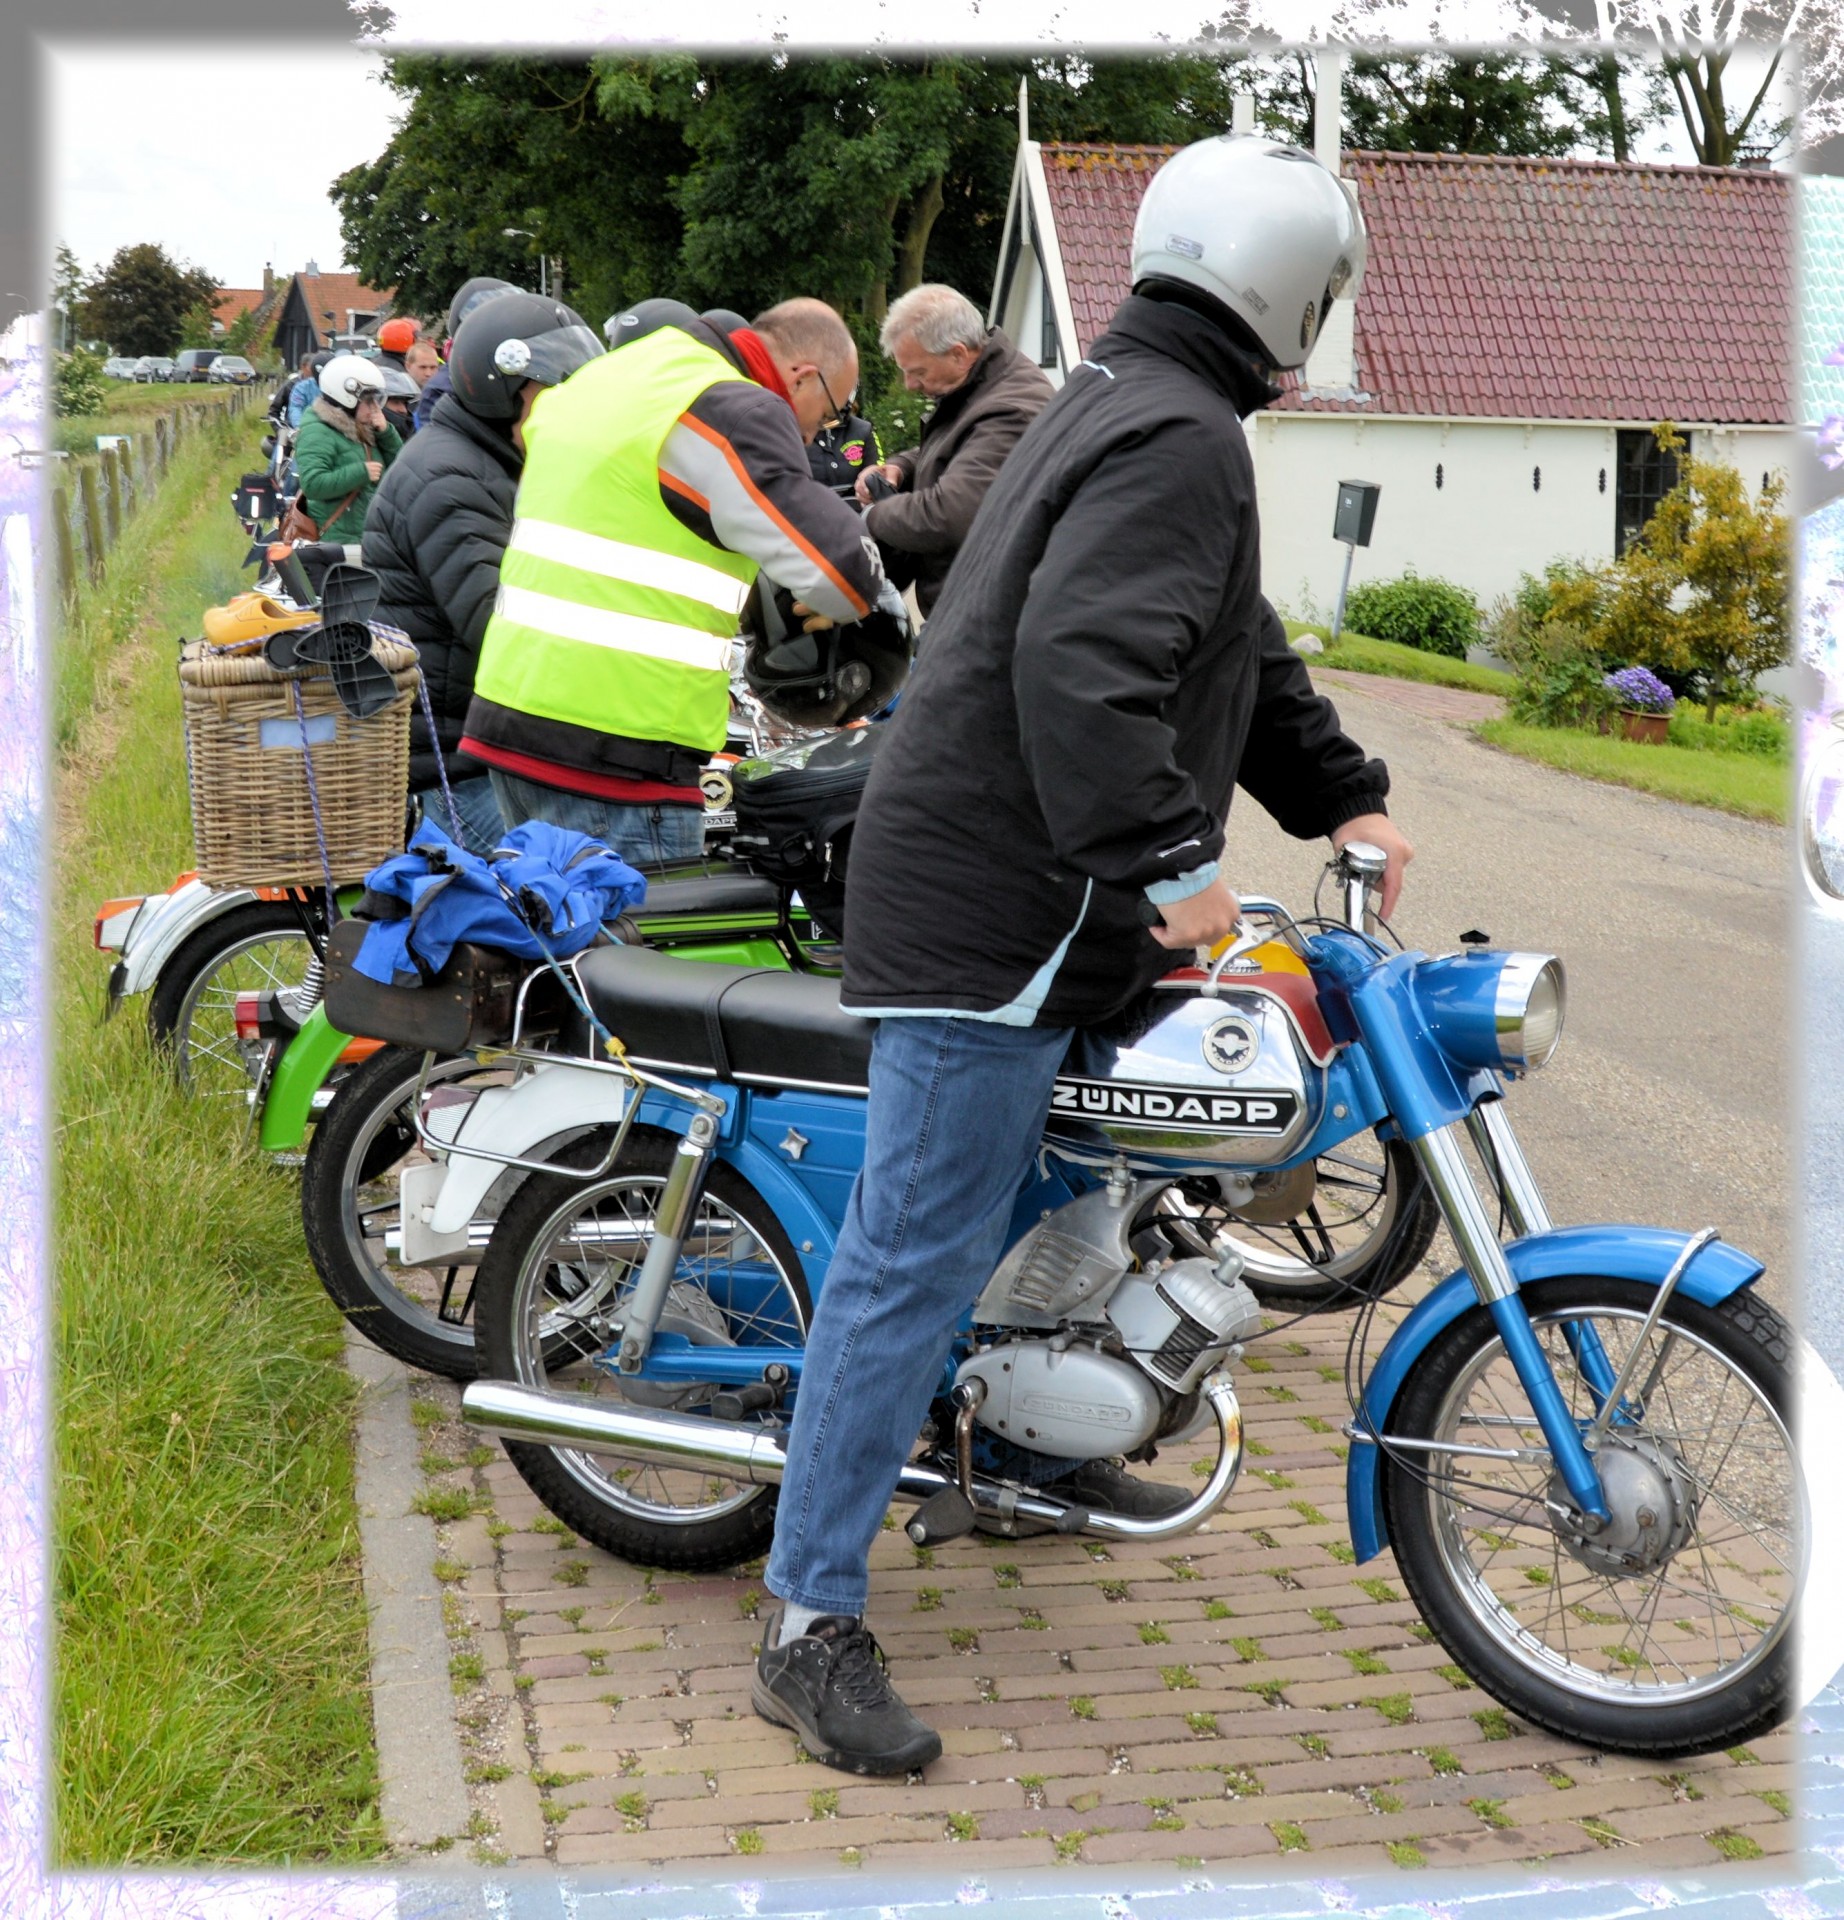 zundapp motorcycle club activities free photo